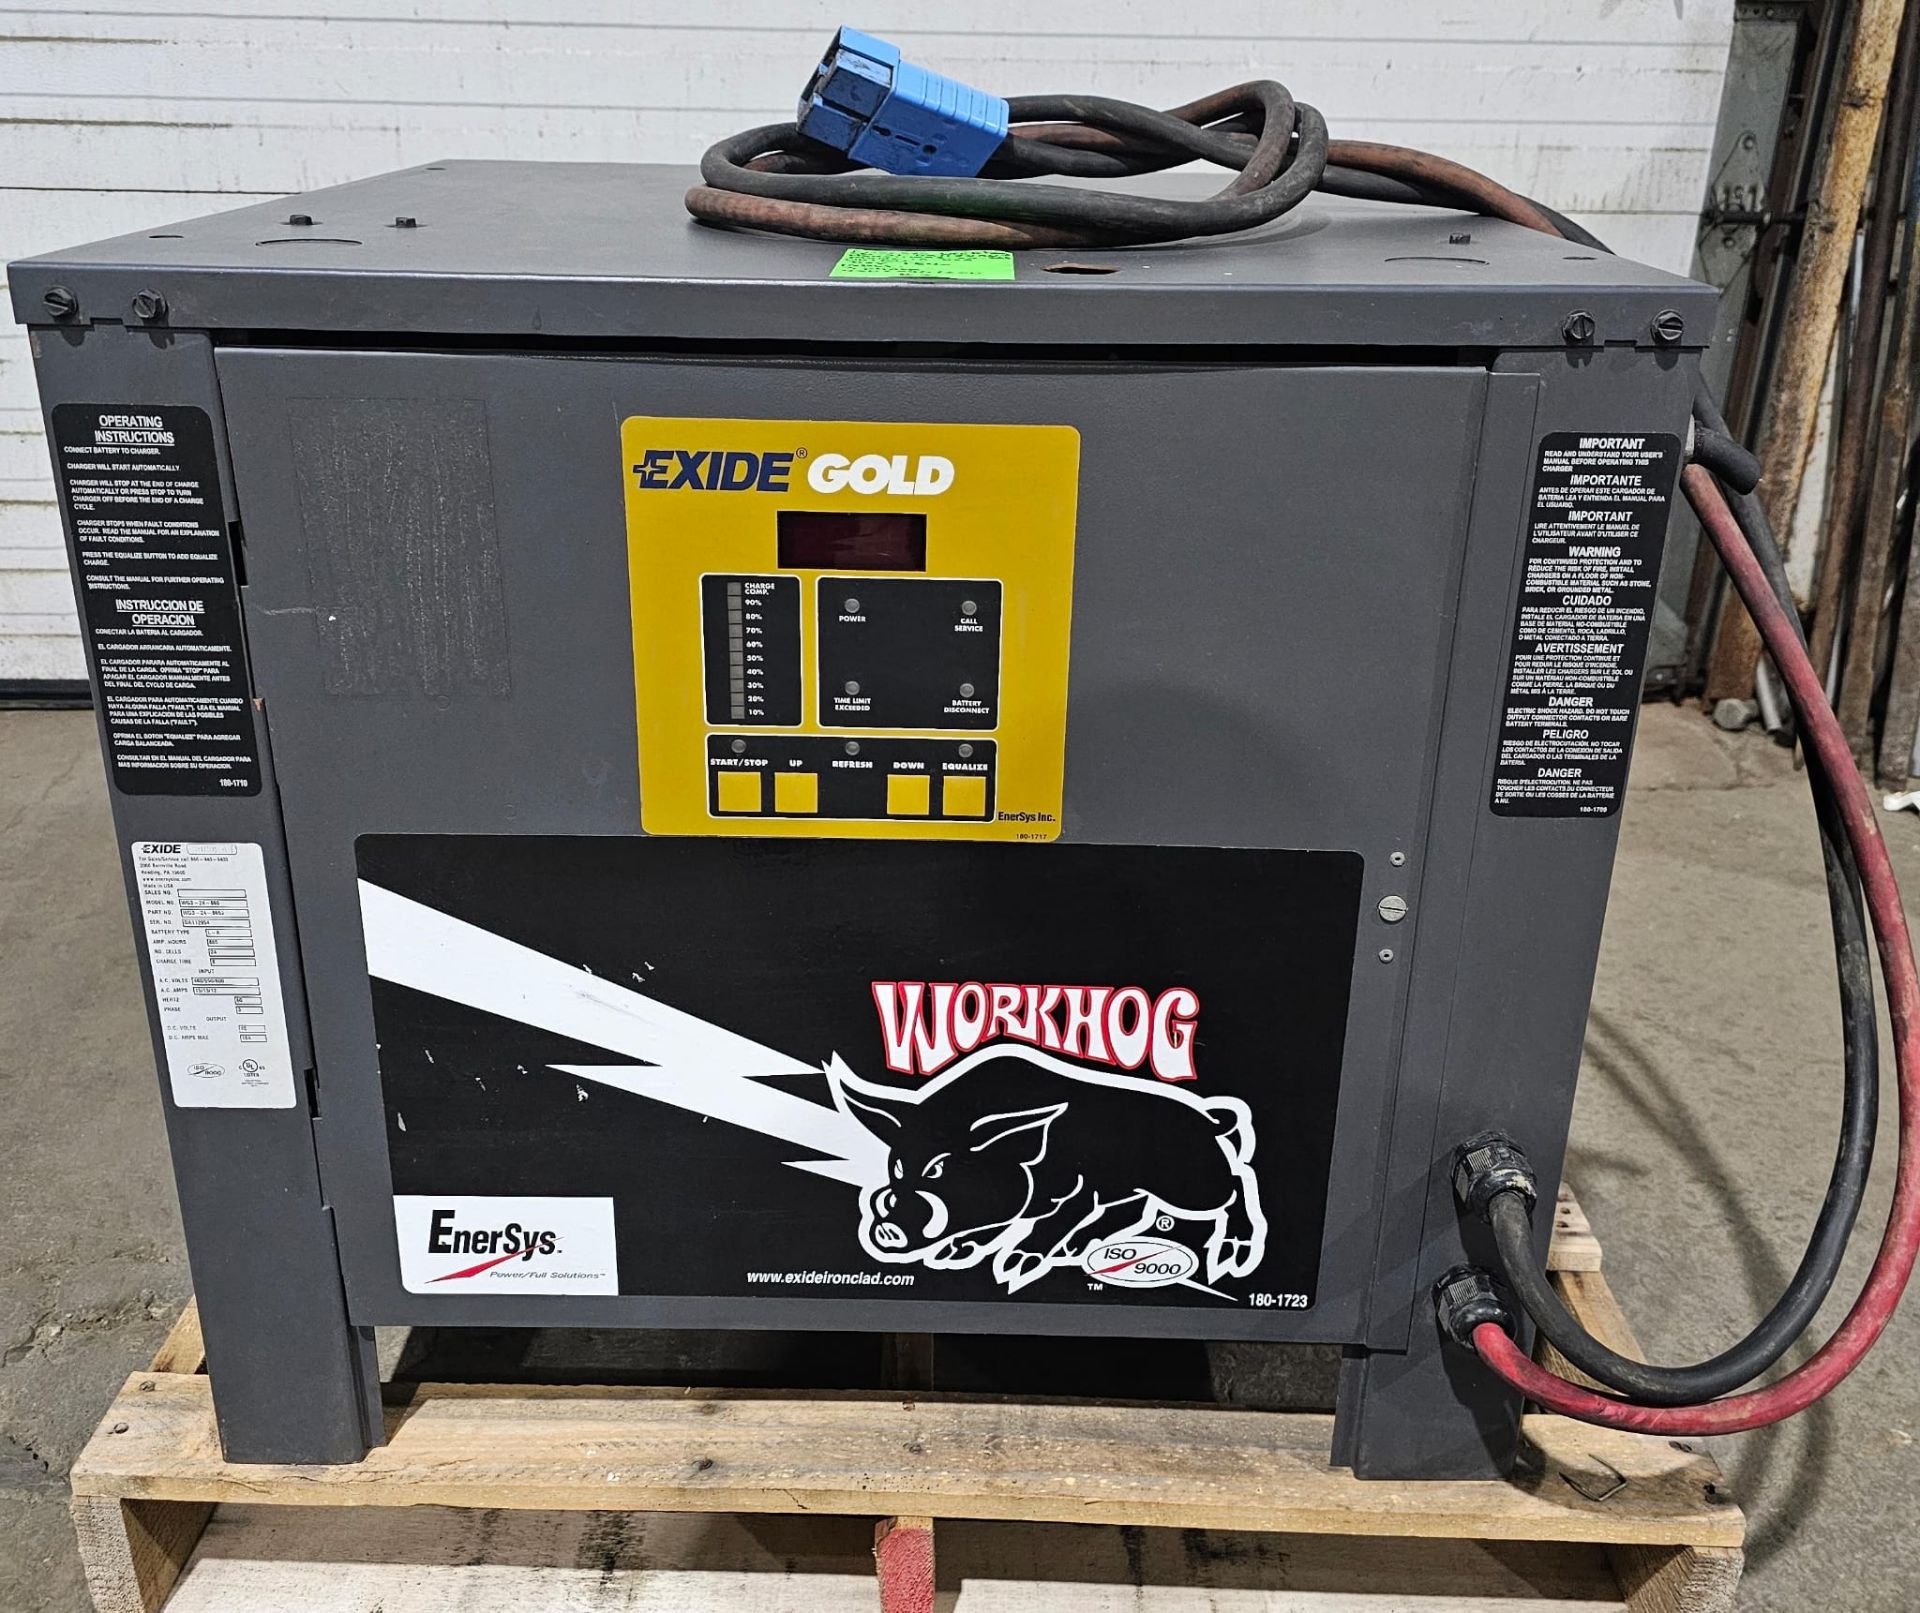 Enersys Workhog Forklift Battery Charger Model: wg3-24-865 - Made in USA - Output: 48V 3 phase 480 / - Image 2 of 4